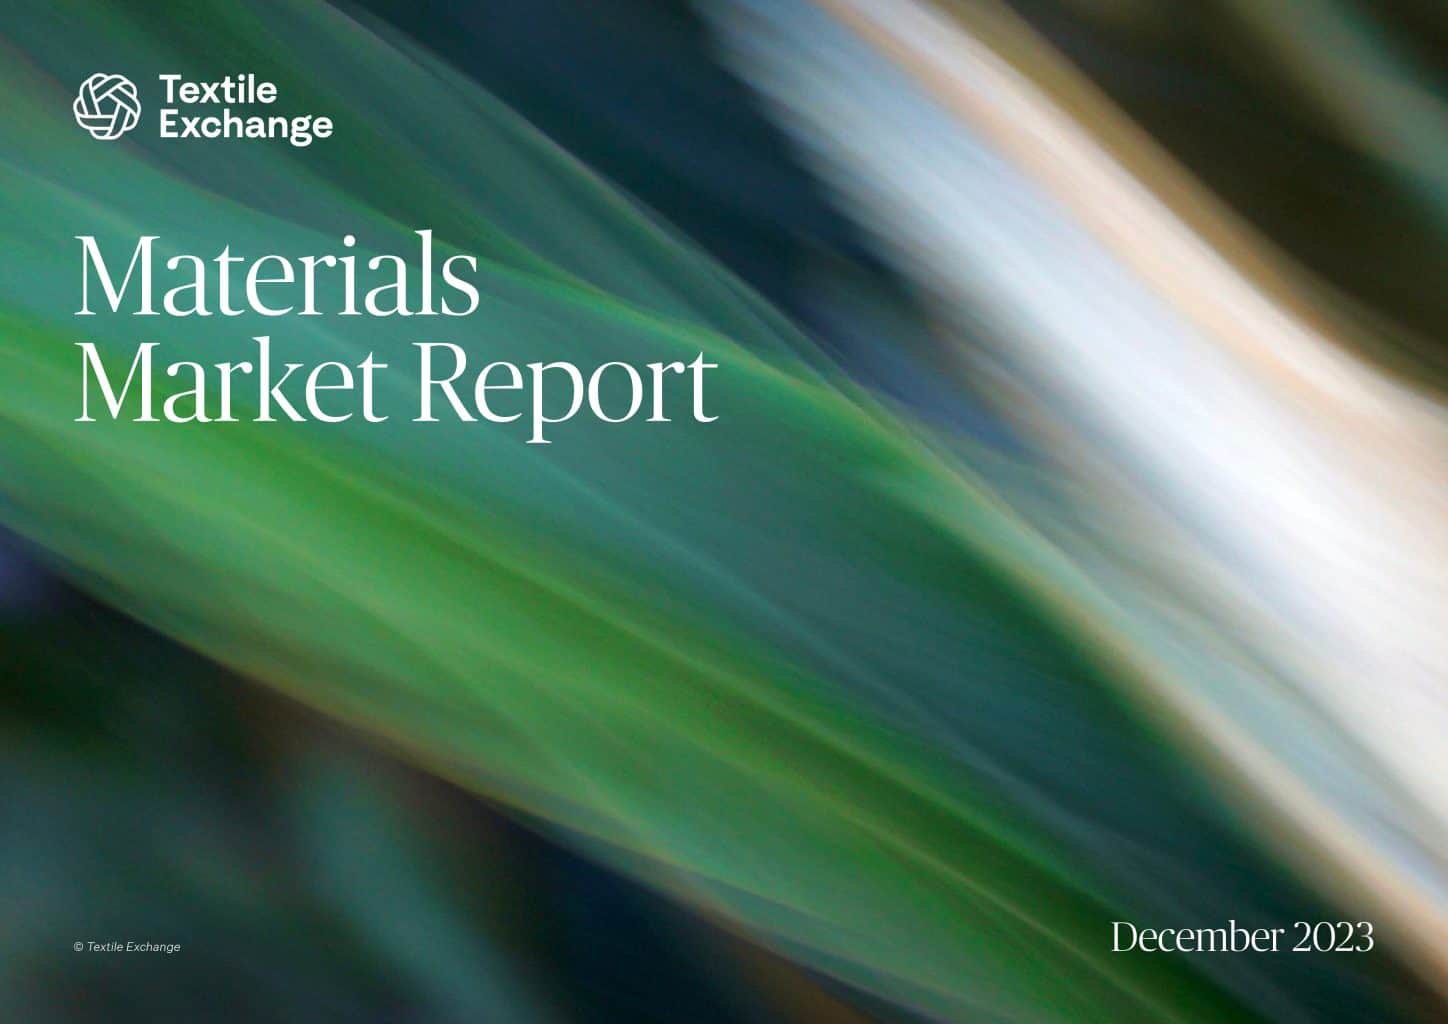 Materials market report 2023 highlights global fiber trends